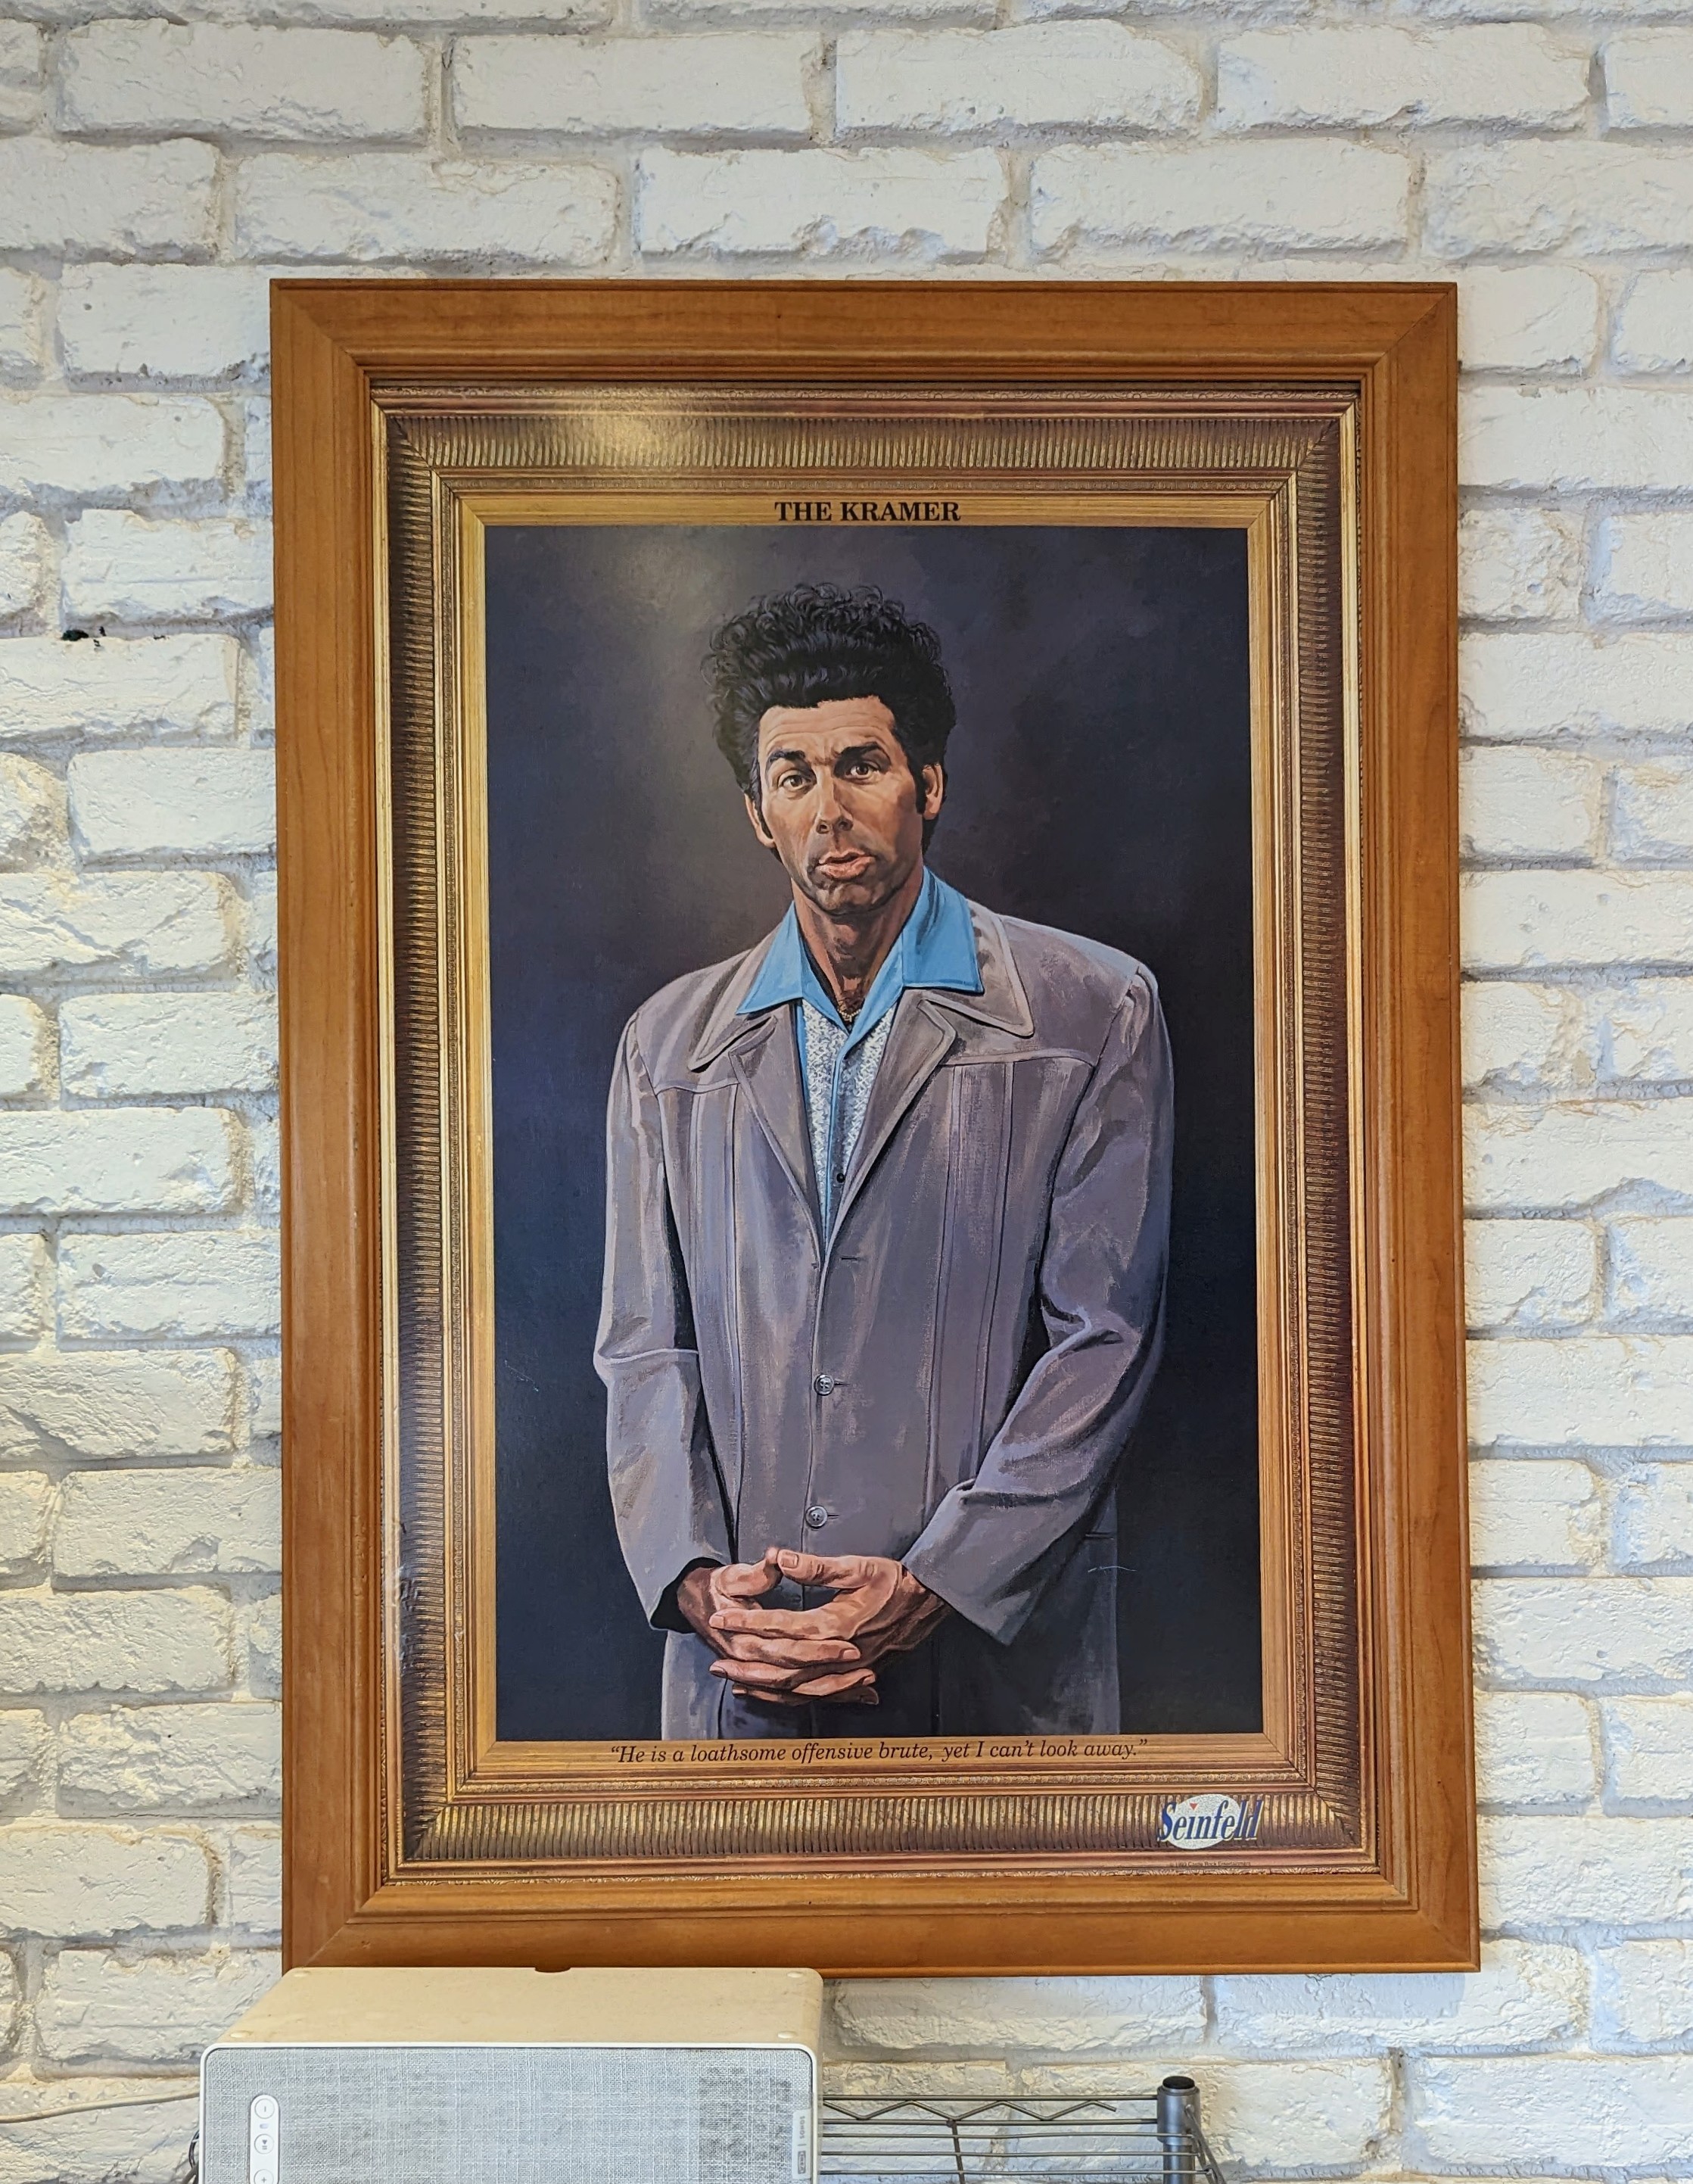 'The Kramer' framed painting on a white café wall